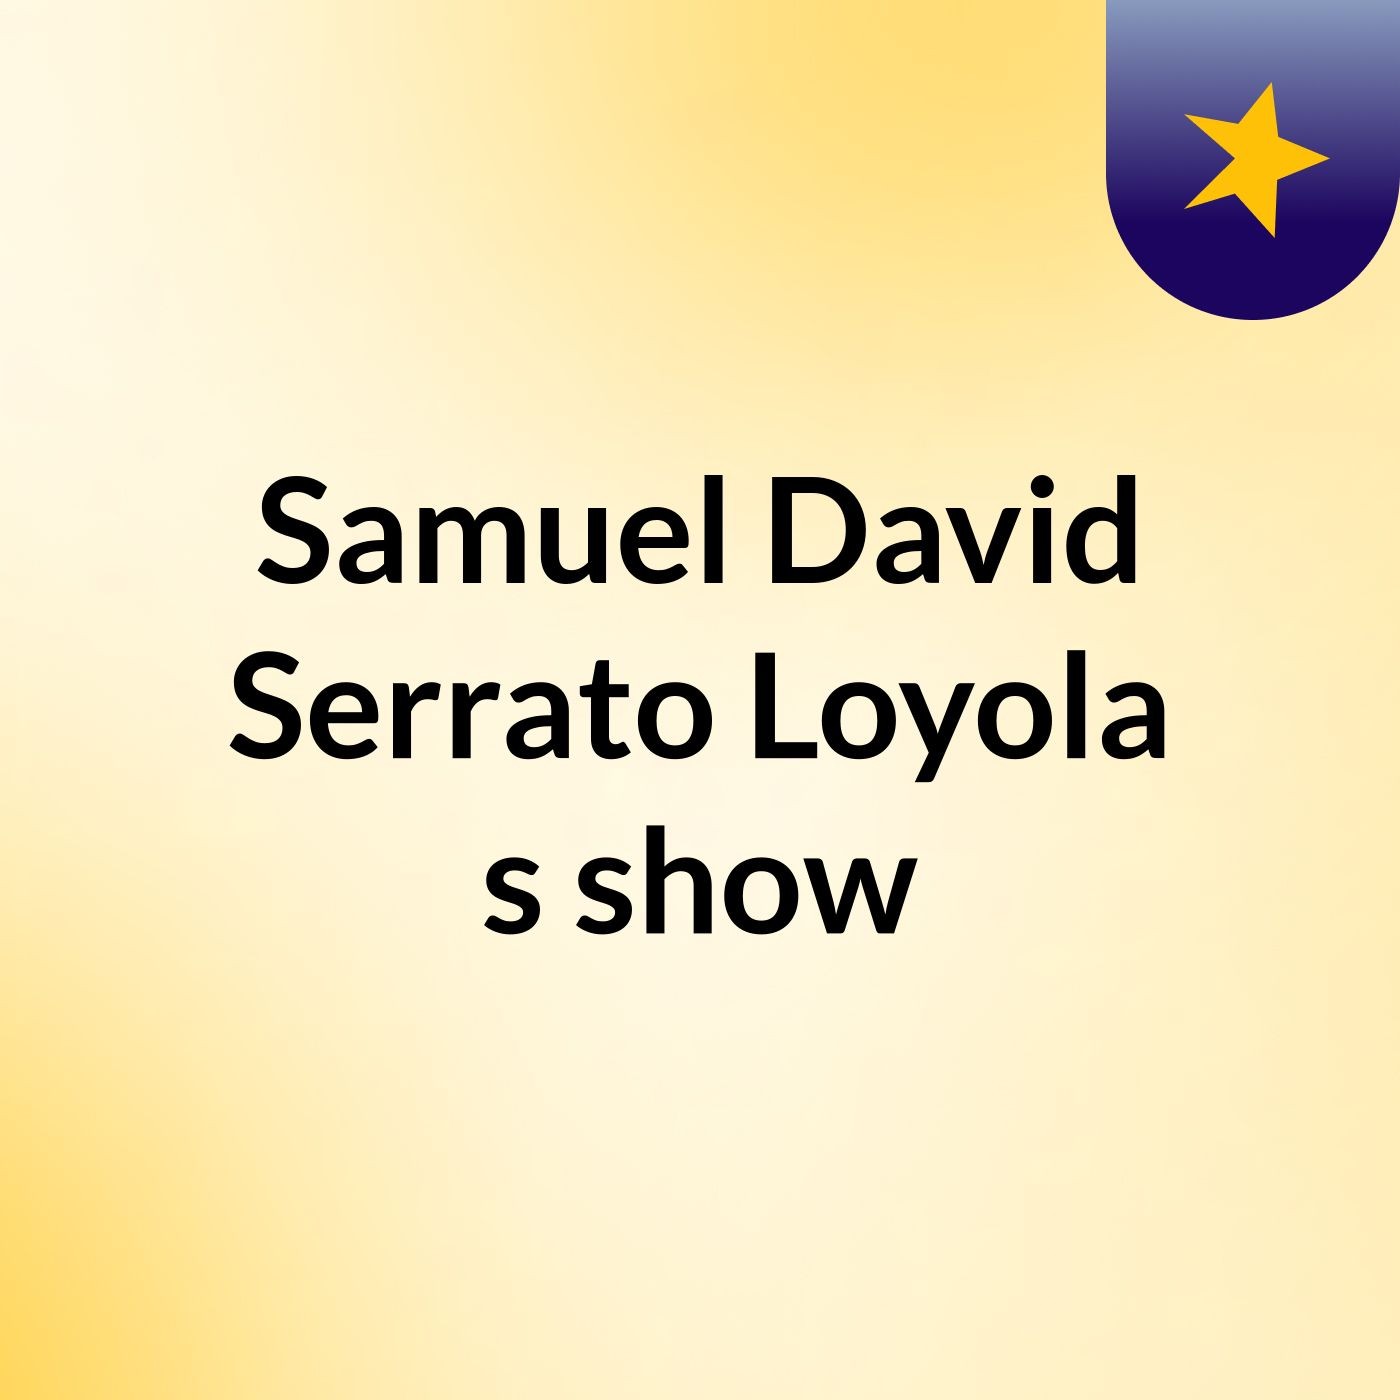 Samuel David Serrato Loyola's show